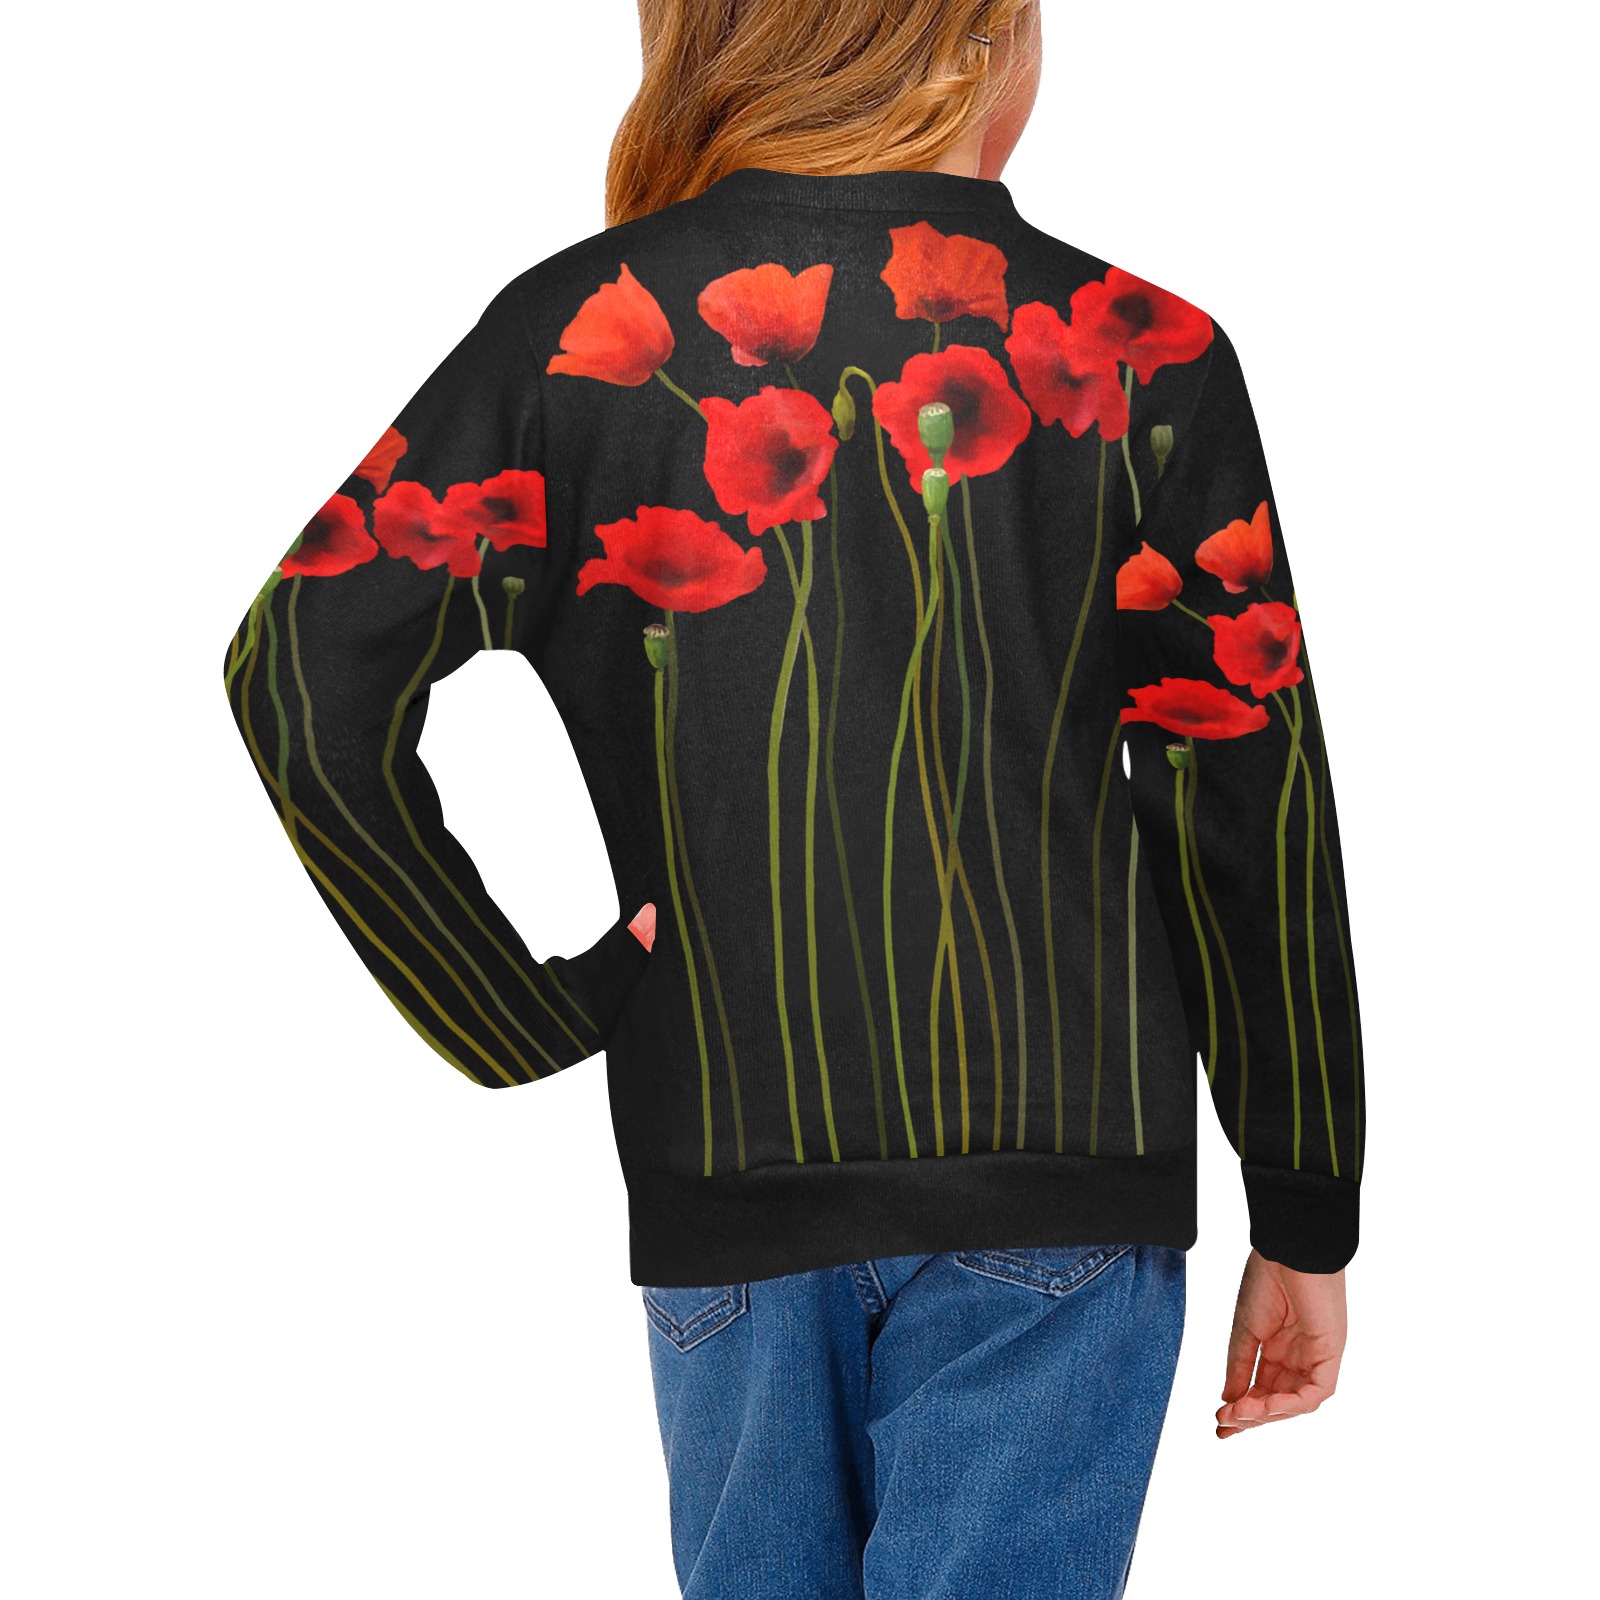 Poppies Floral Design Papaver somniferum Girls' All Over Print Crew Neck Sweater (Model H49)